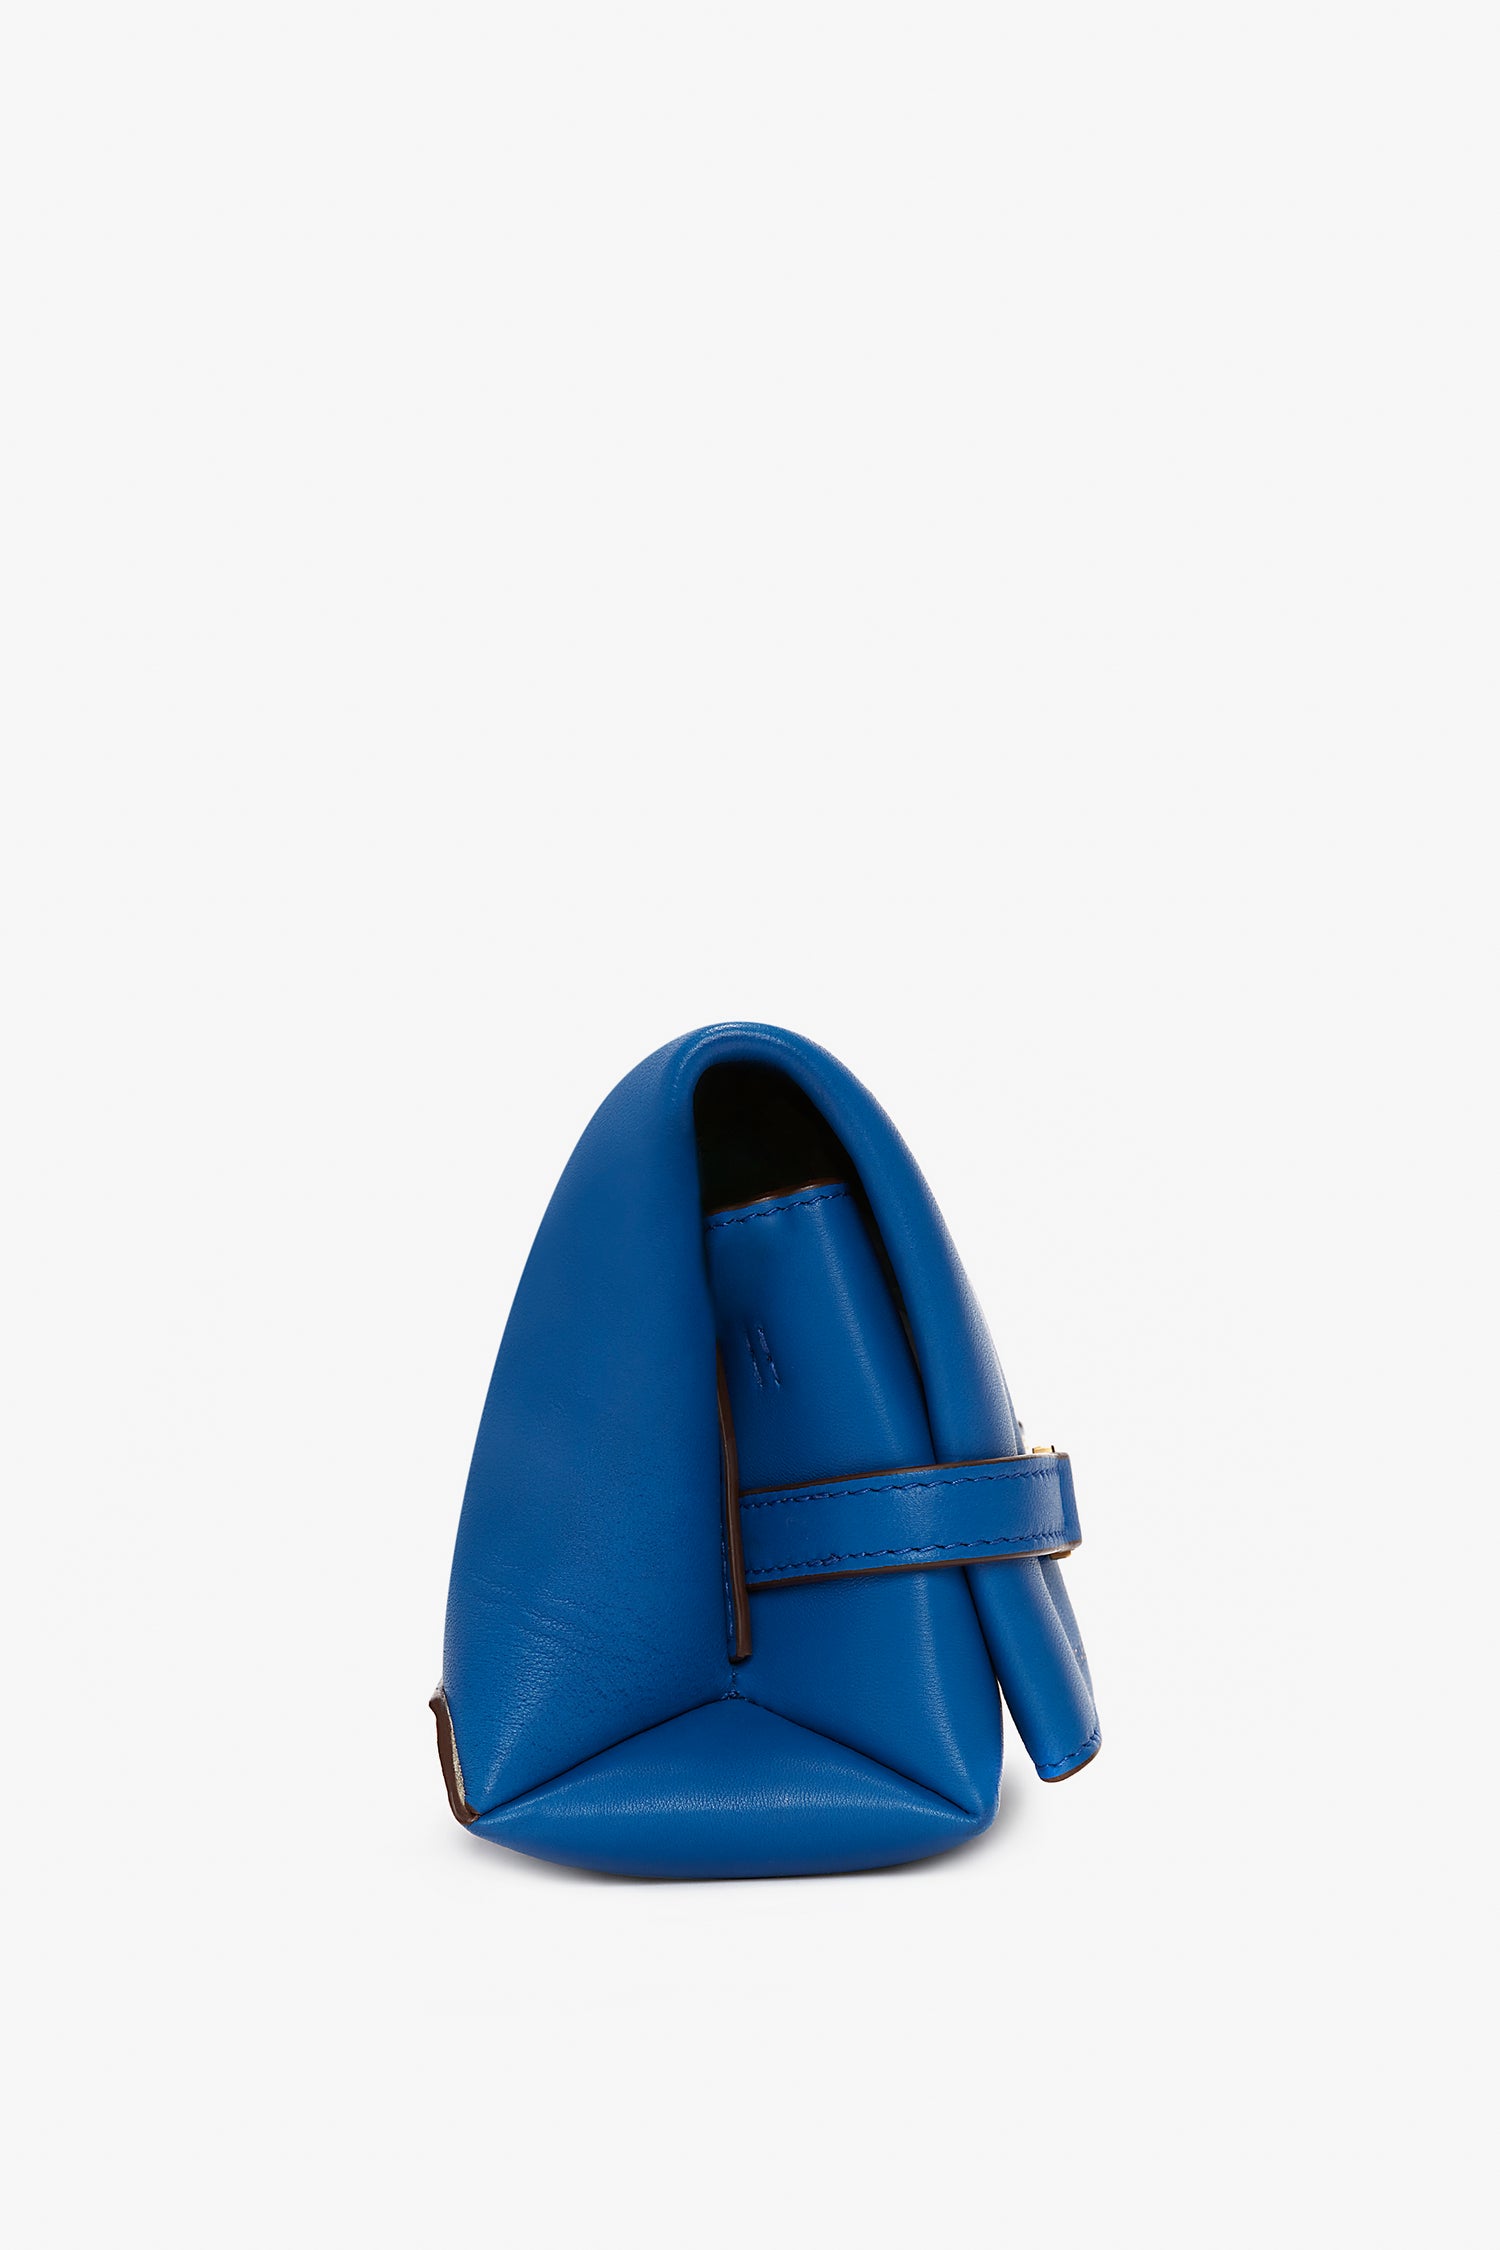 Victoria Beckham Mini Chain Pouch Sapphire Blue Leather Clutch Bag